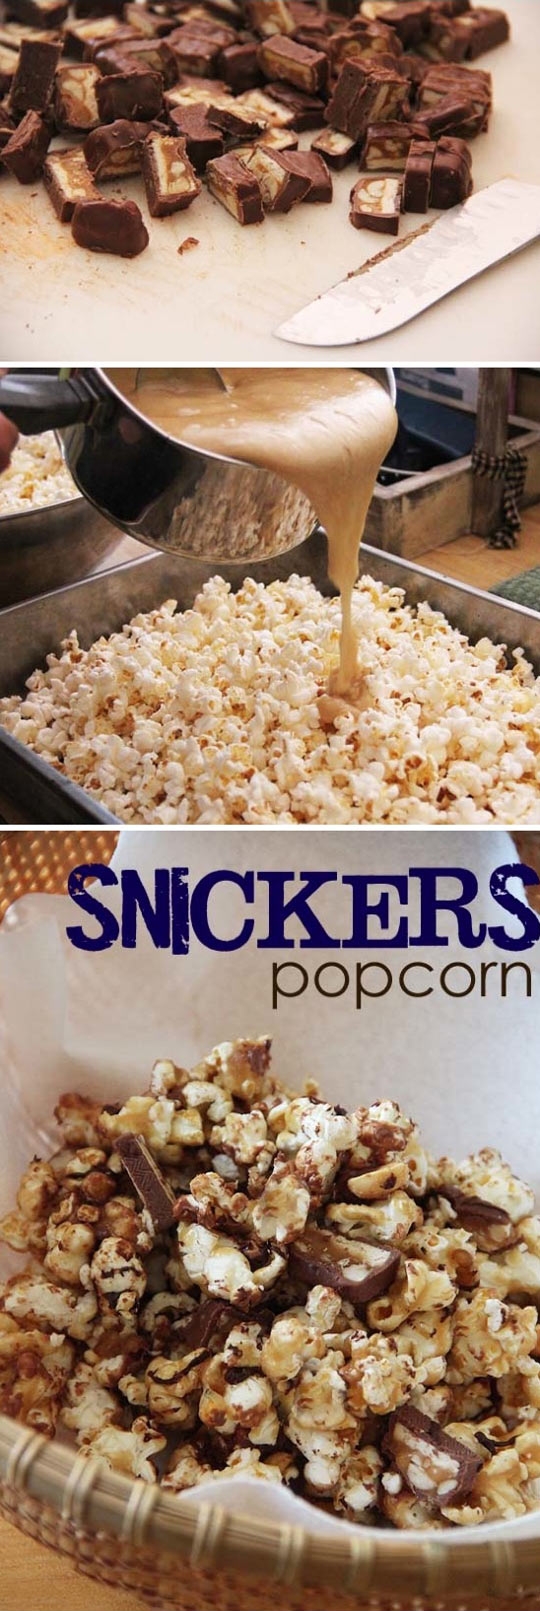 fun randoms - funny photos - snickers popcorn - Snickers popcorn